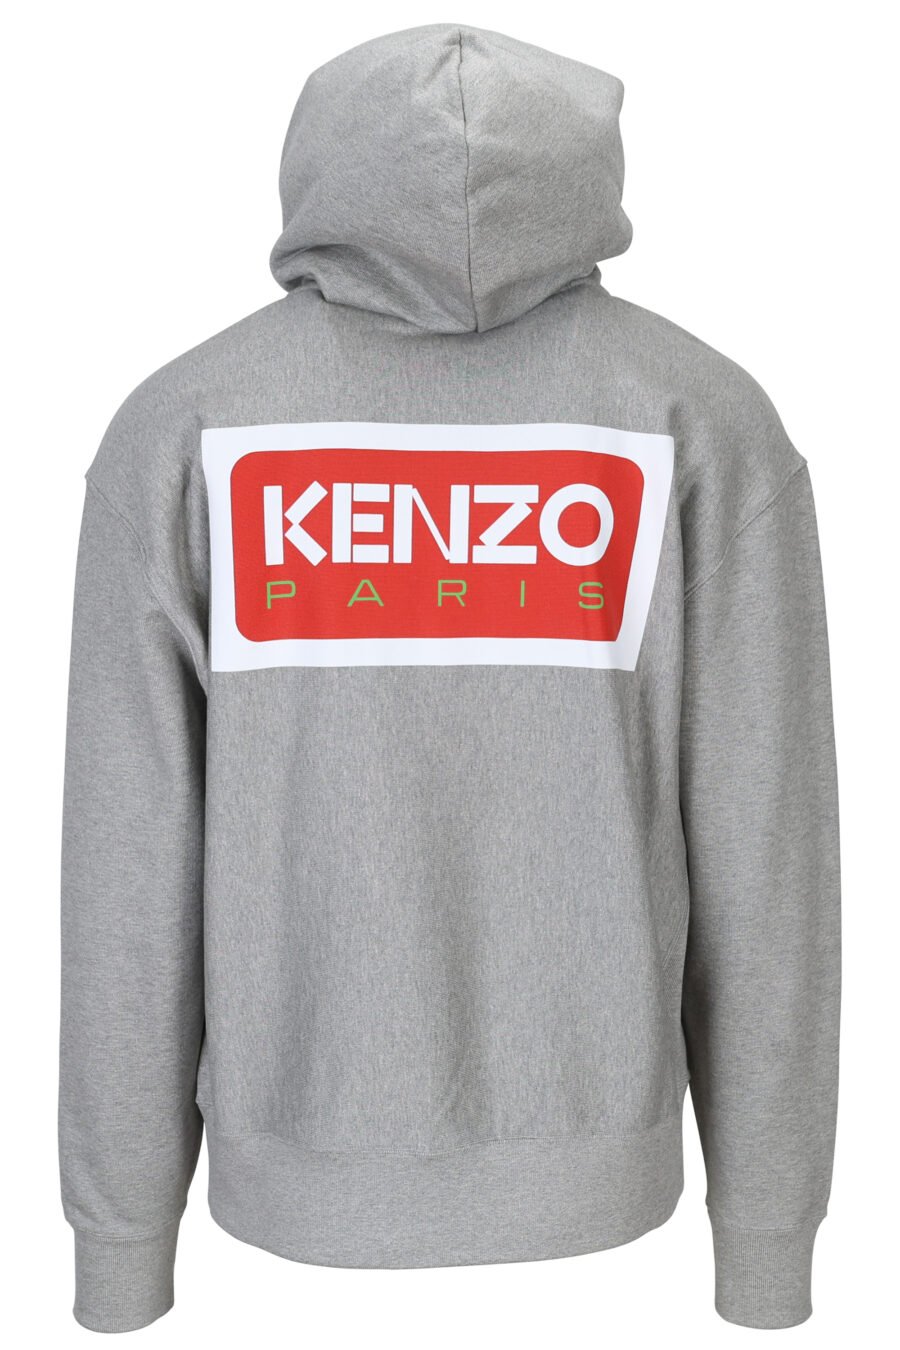 Grey hooded sweatshirt with "kenzo paris" maxilogo on the back - 3612230537491 1